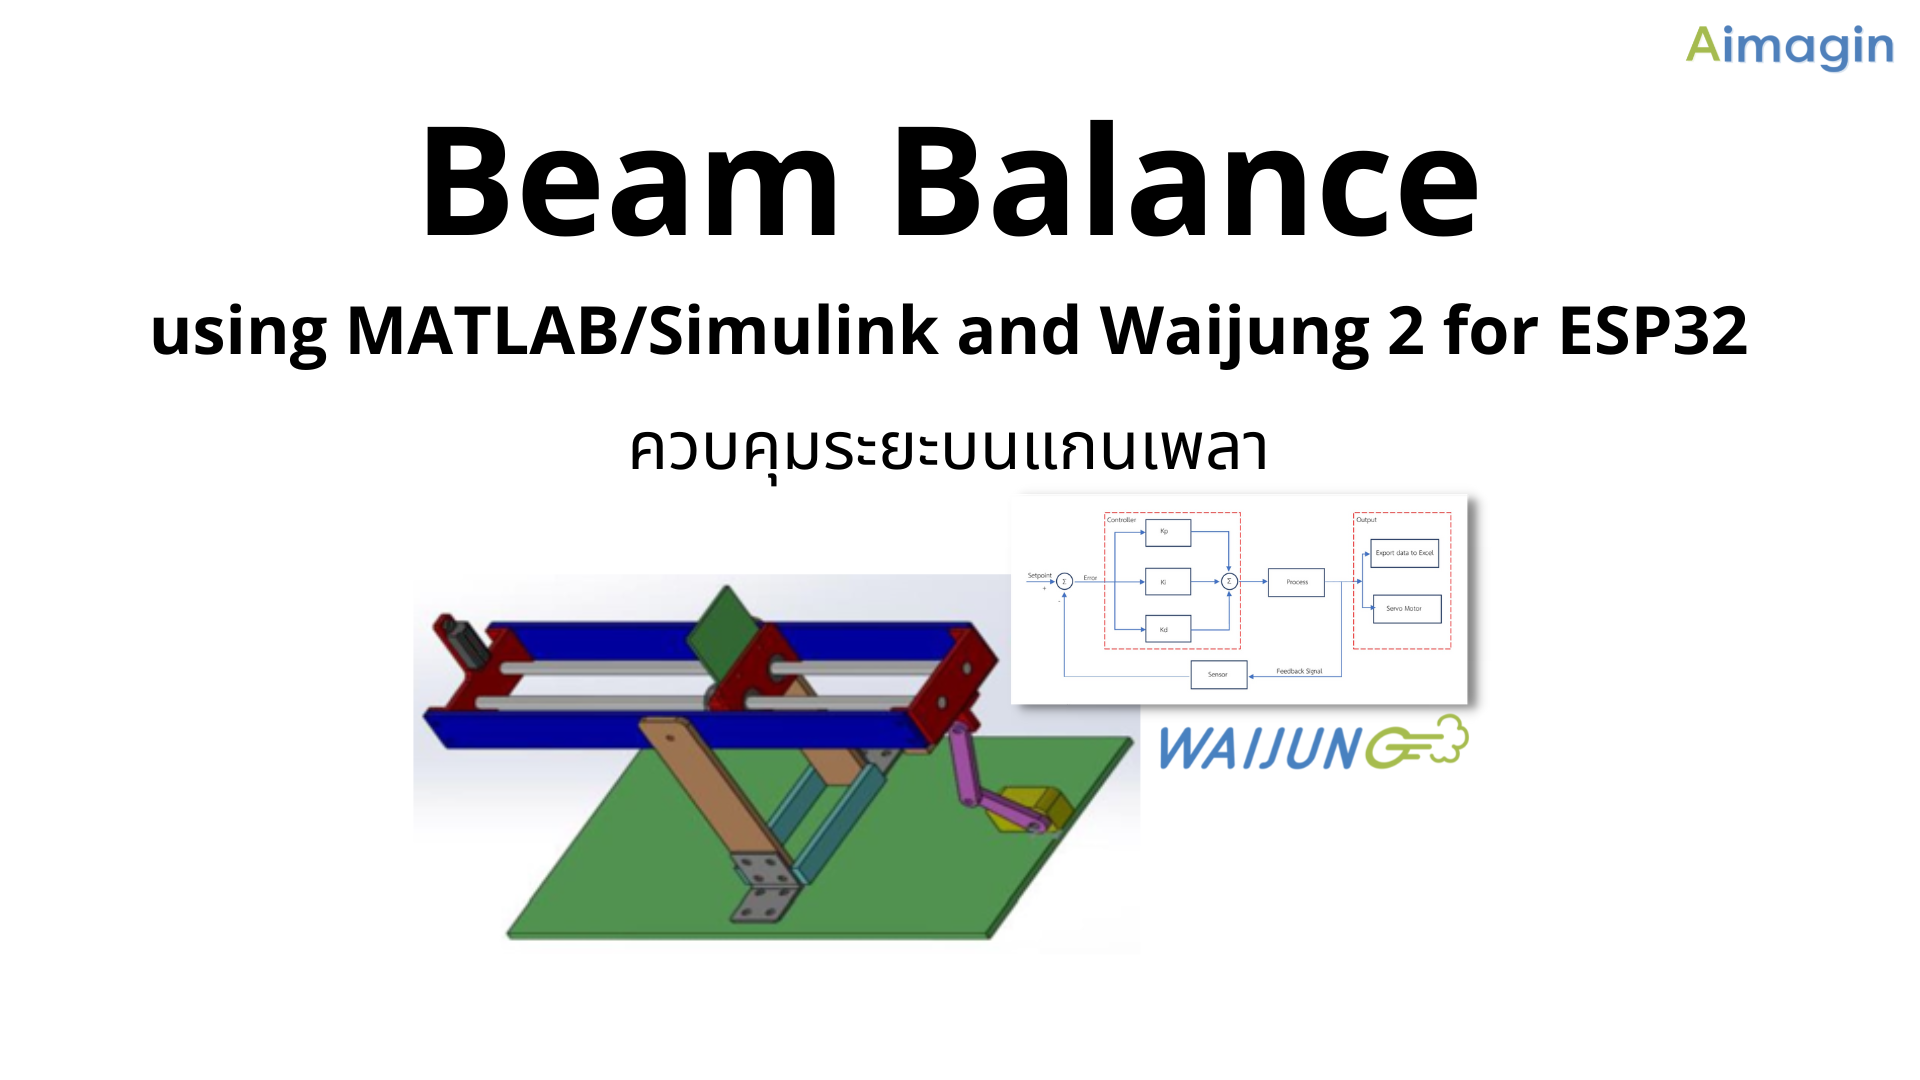 Beam Balance using MATLAB/Simulink and Waijung 2 for ESP32